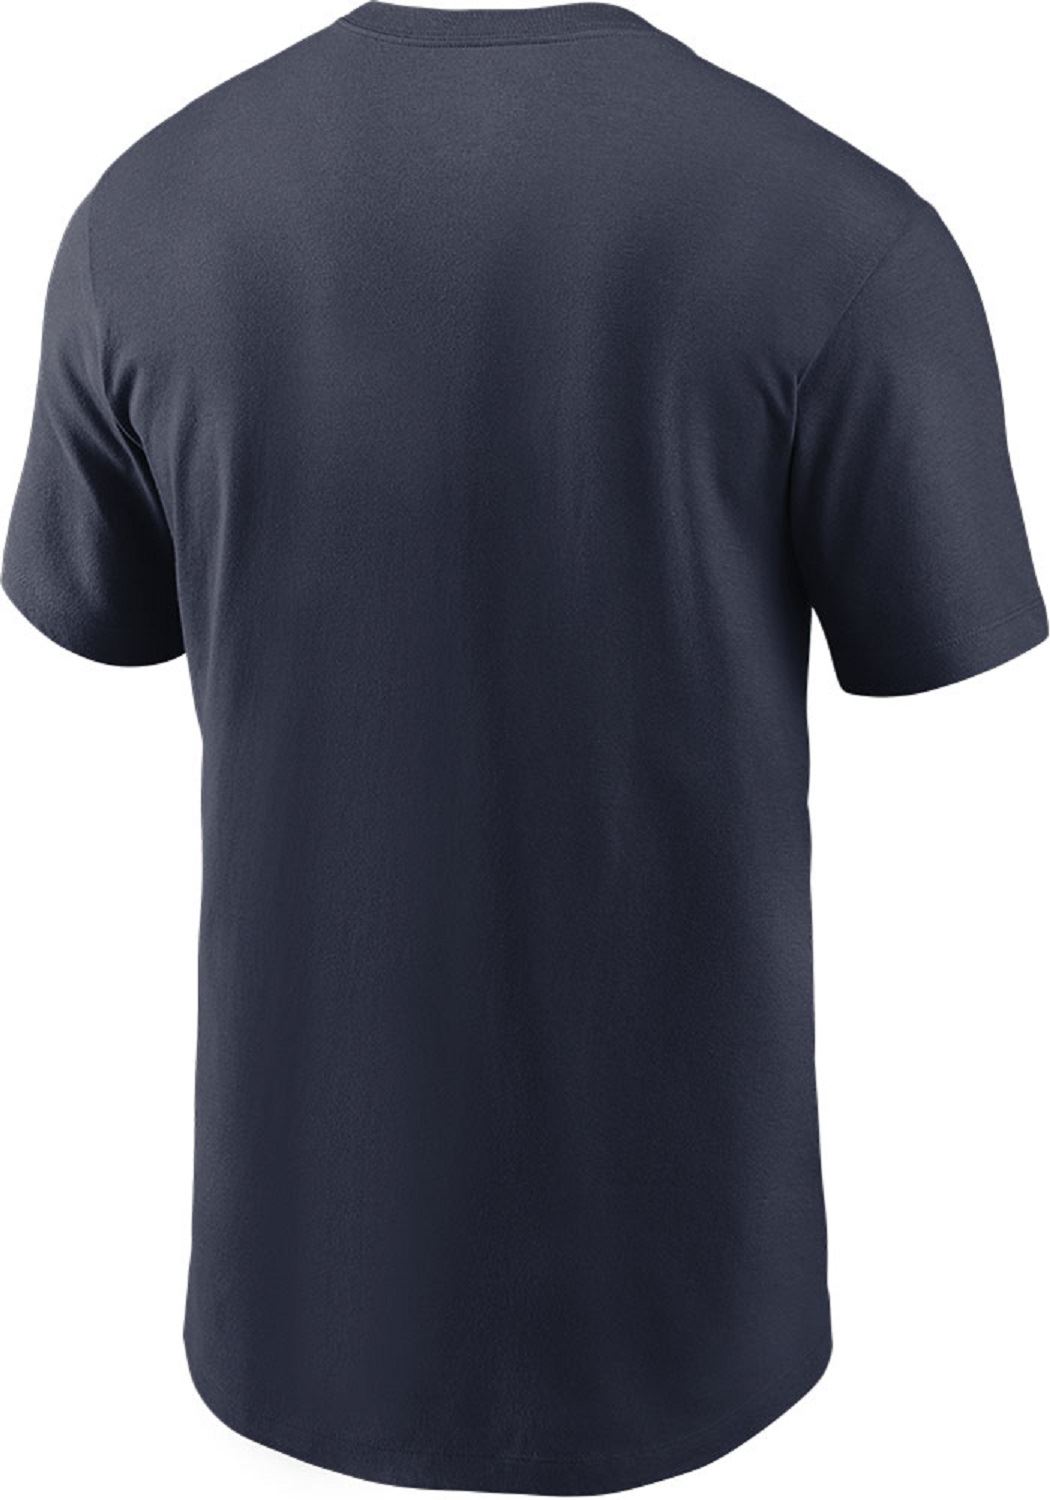 Dallas Cowboys NFL Split Team Name Essential Tee College Navy T-Shirt Nike